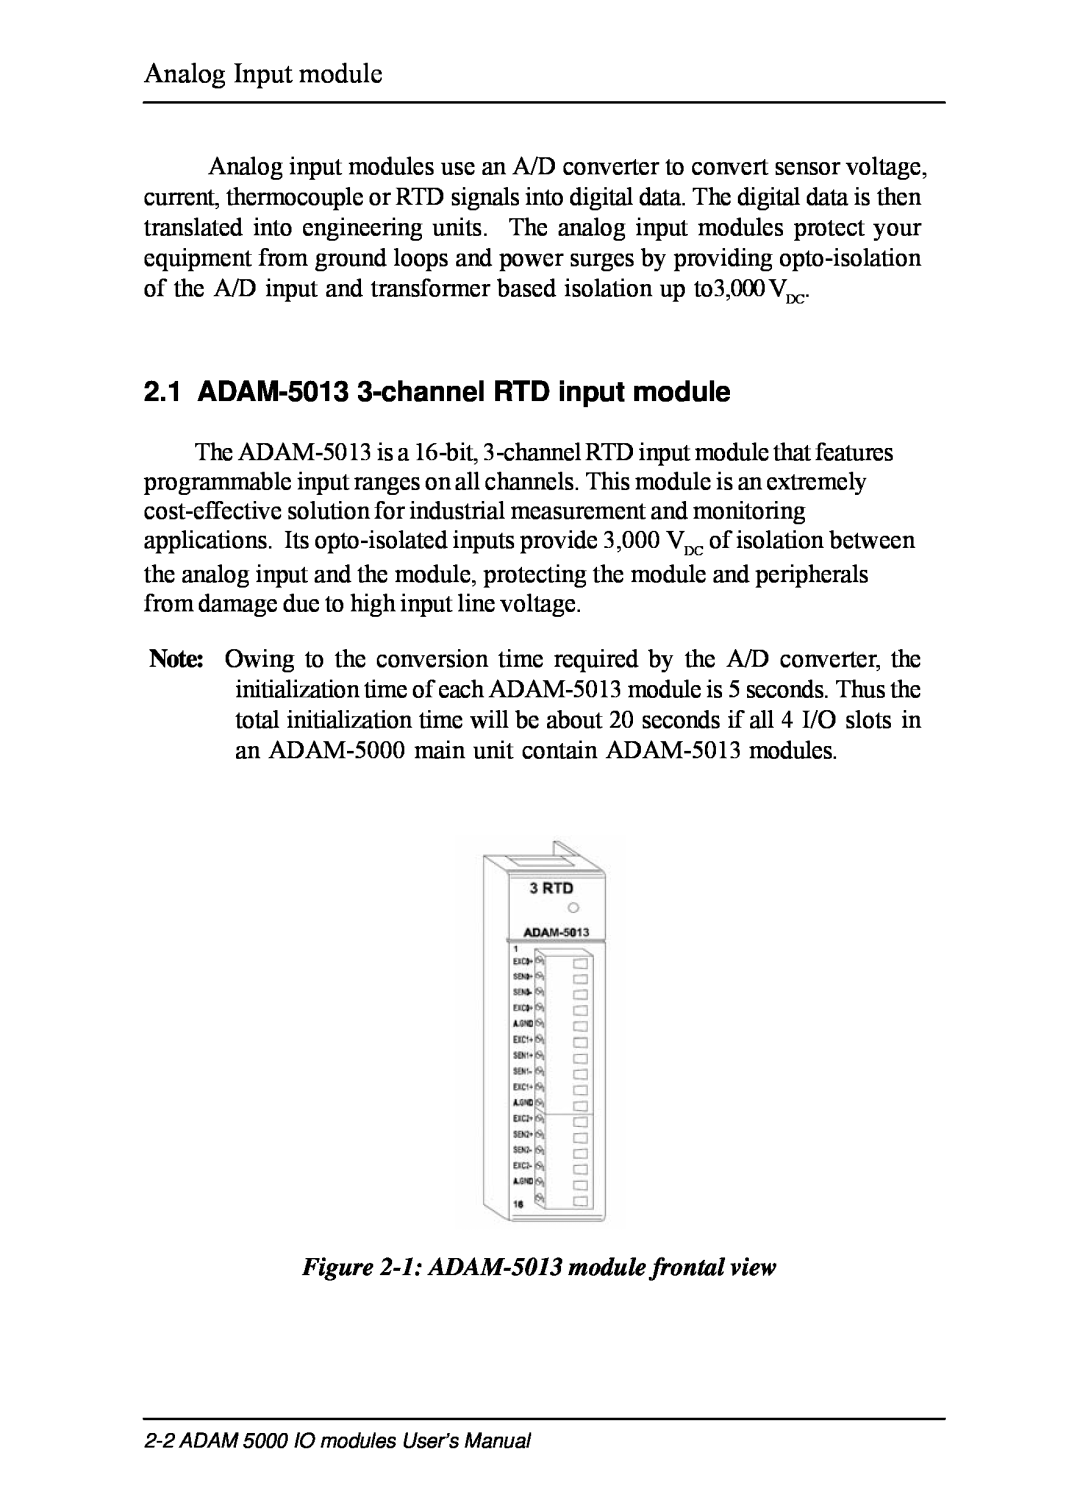 B&B Electronics 5000 Series Analog Input module, ADAM-5013 3-channel RTD input module, 1 ADAM-5013 module frontal view 